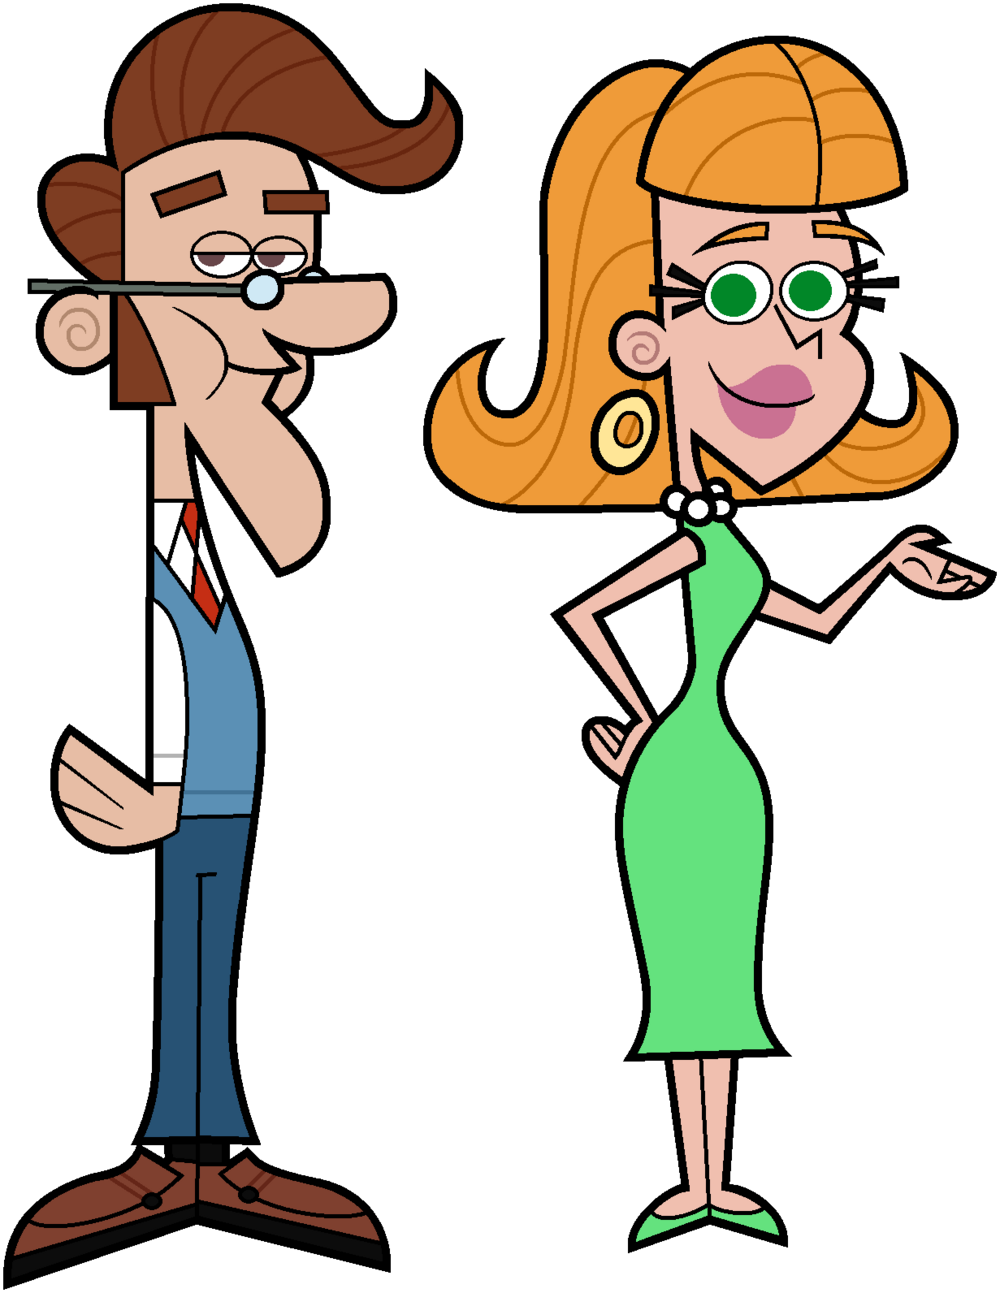 Mister Hugh Neutron and Mrises Judy Neutron | 2D Animated Wiki | Fandom